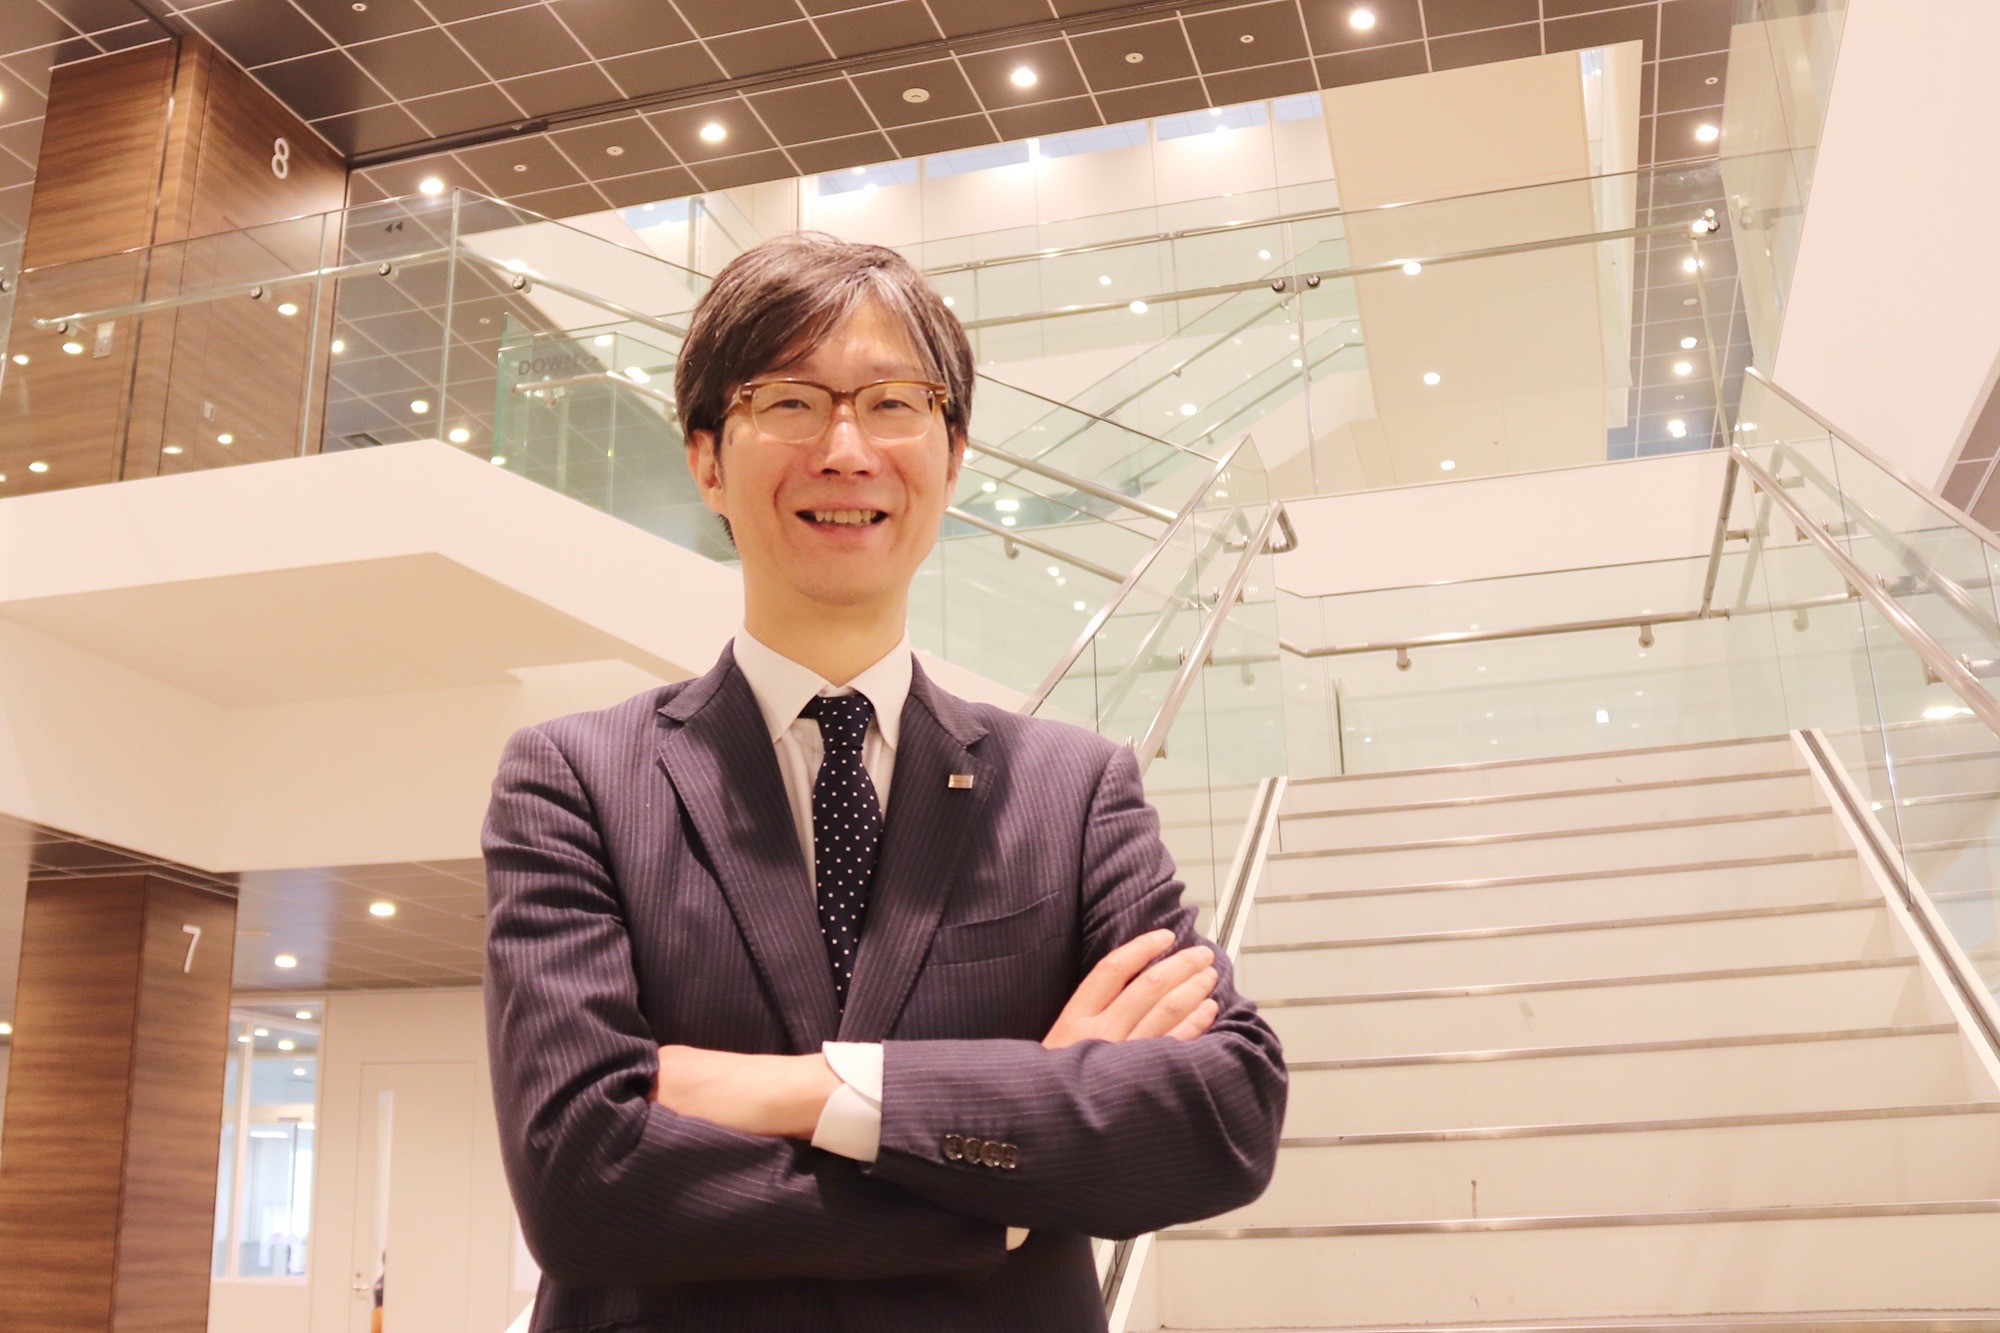 Entering the New Digital Arena: How Chief Digital Officer Taro Shimada envisions Toshiba’s Transformation